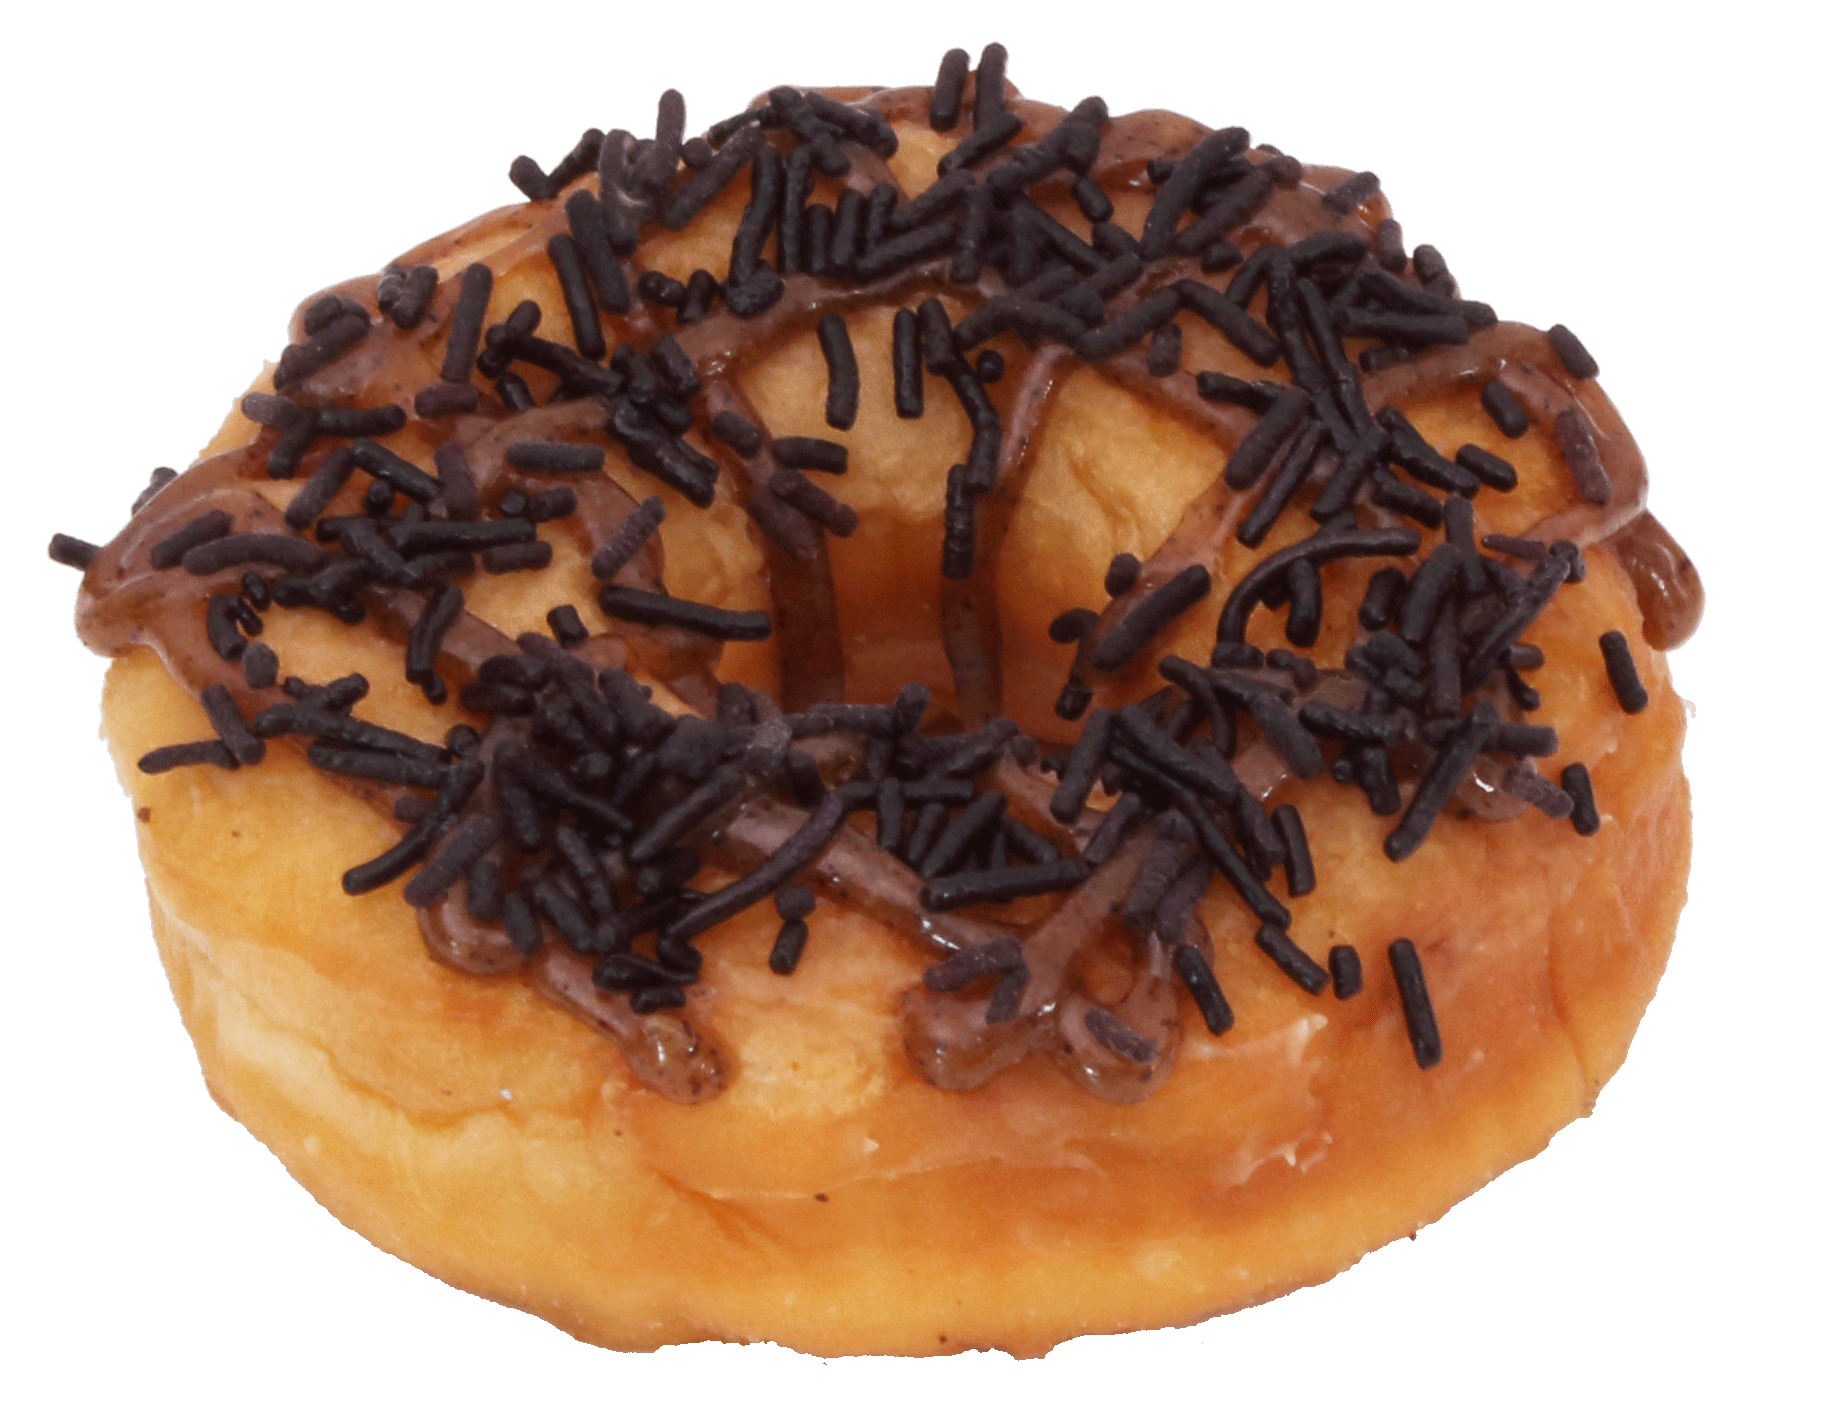 Jbees donuts naked caramel. Donut clipart vanilla donut